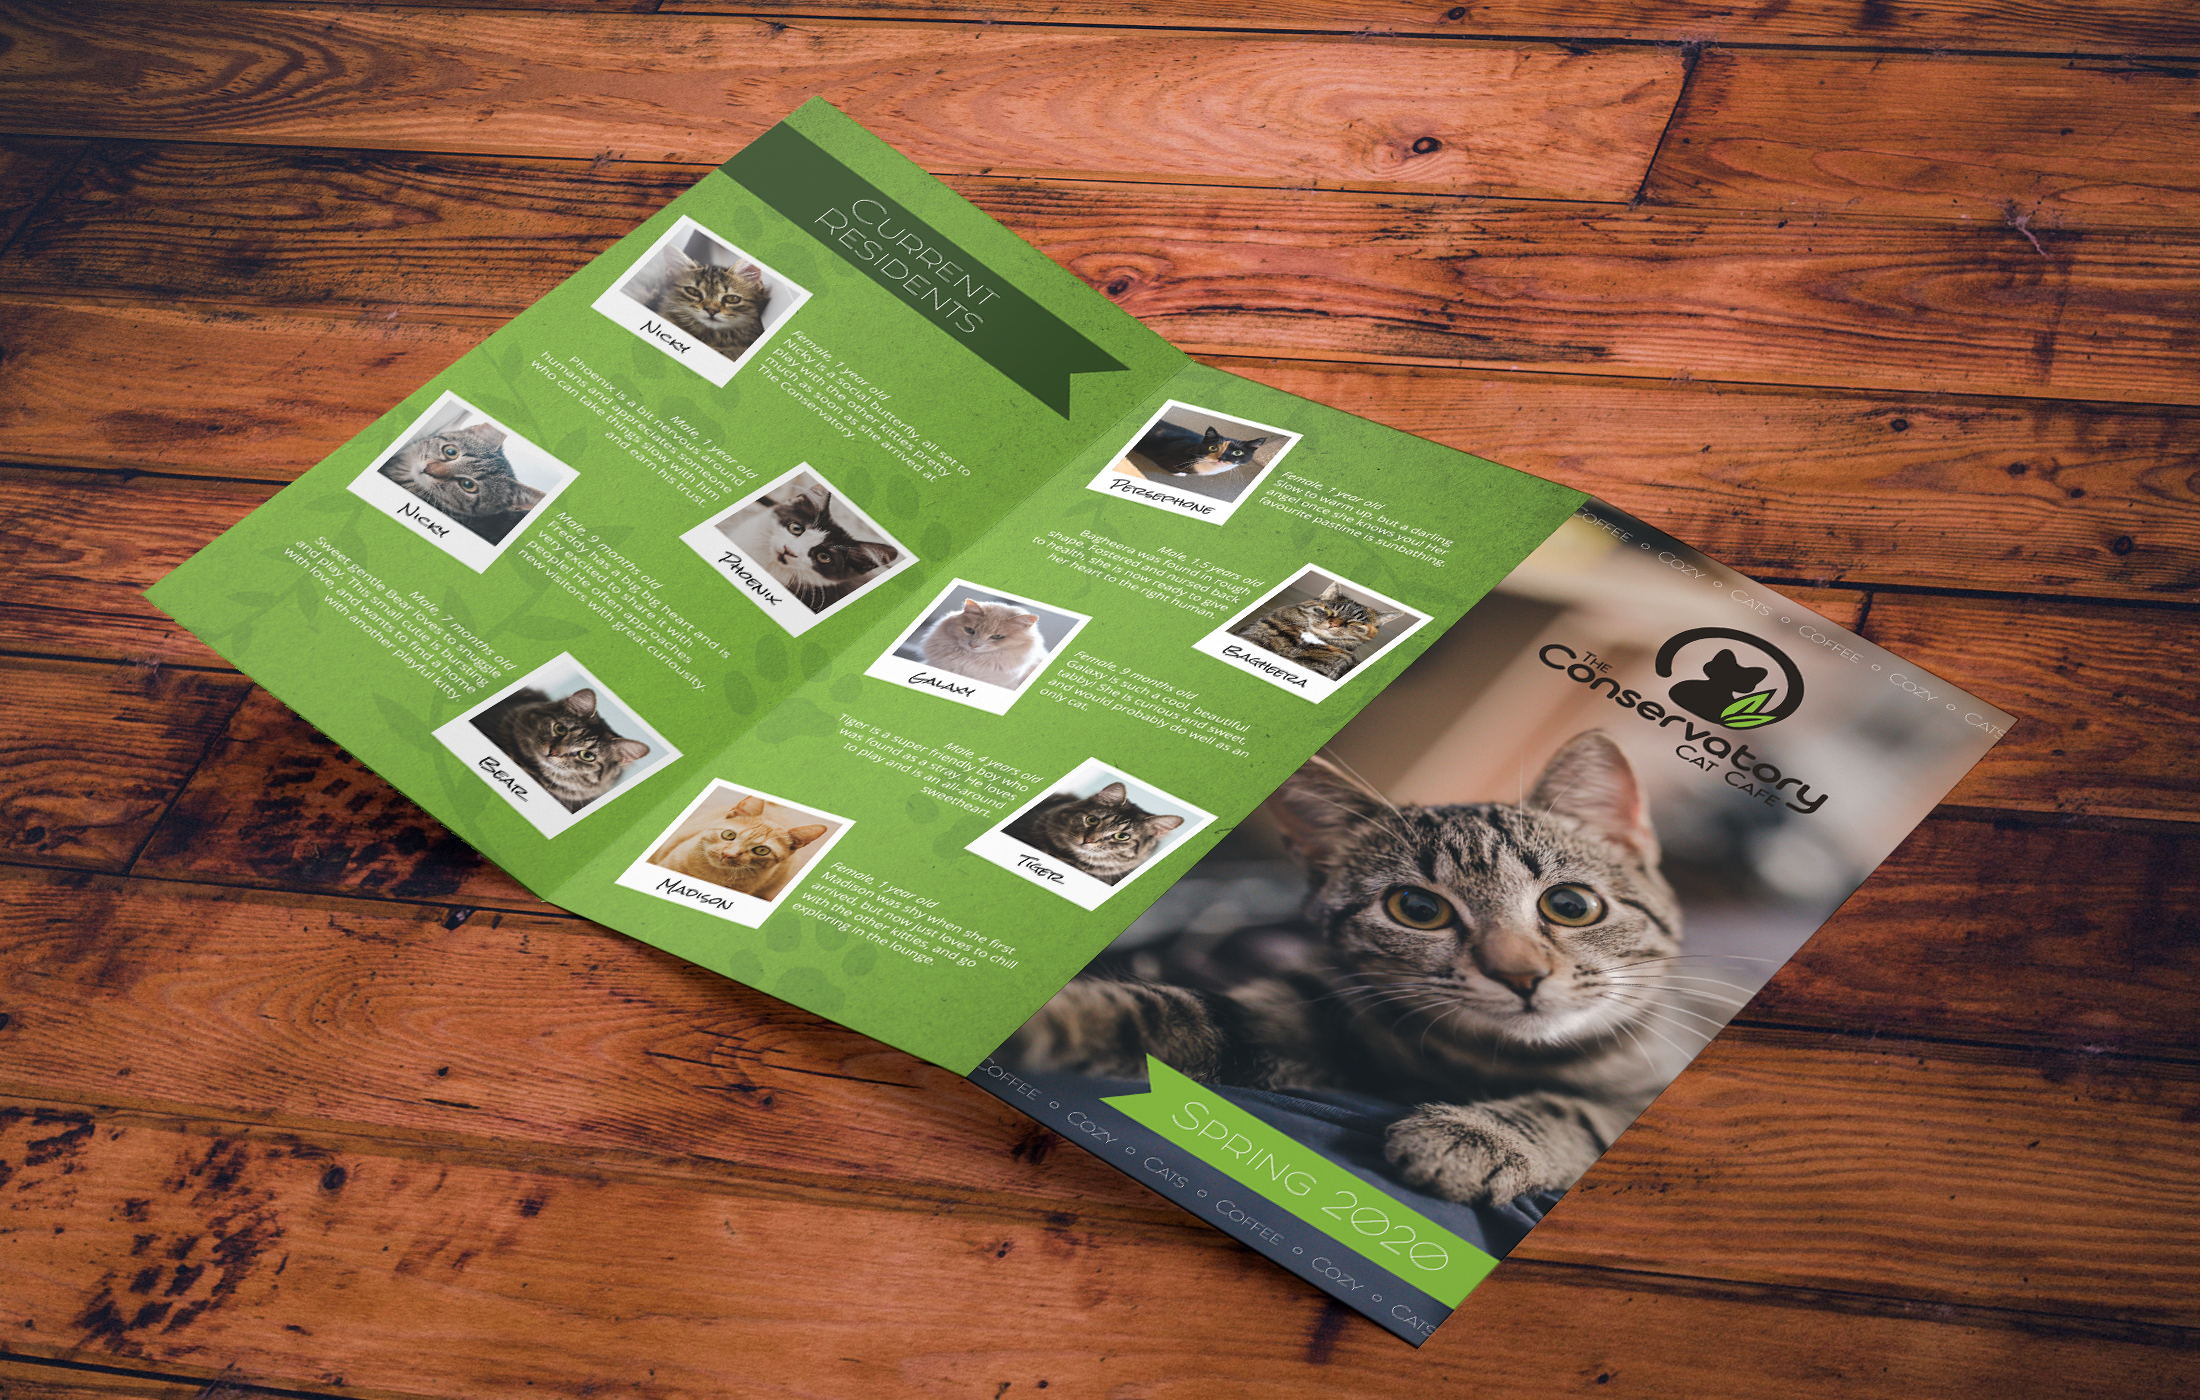 Redesigned Conservatory Cat Café brochure